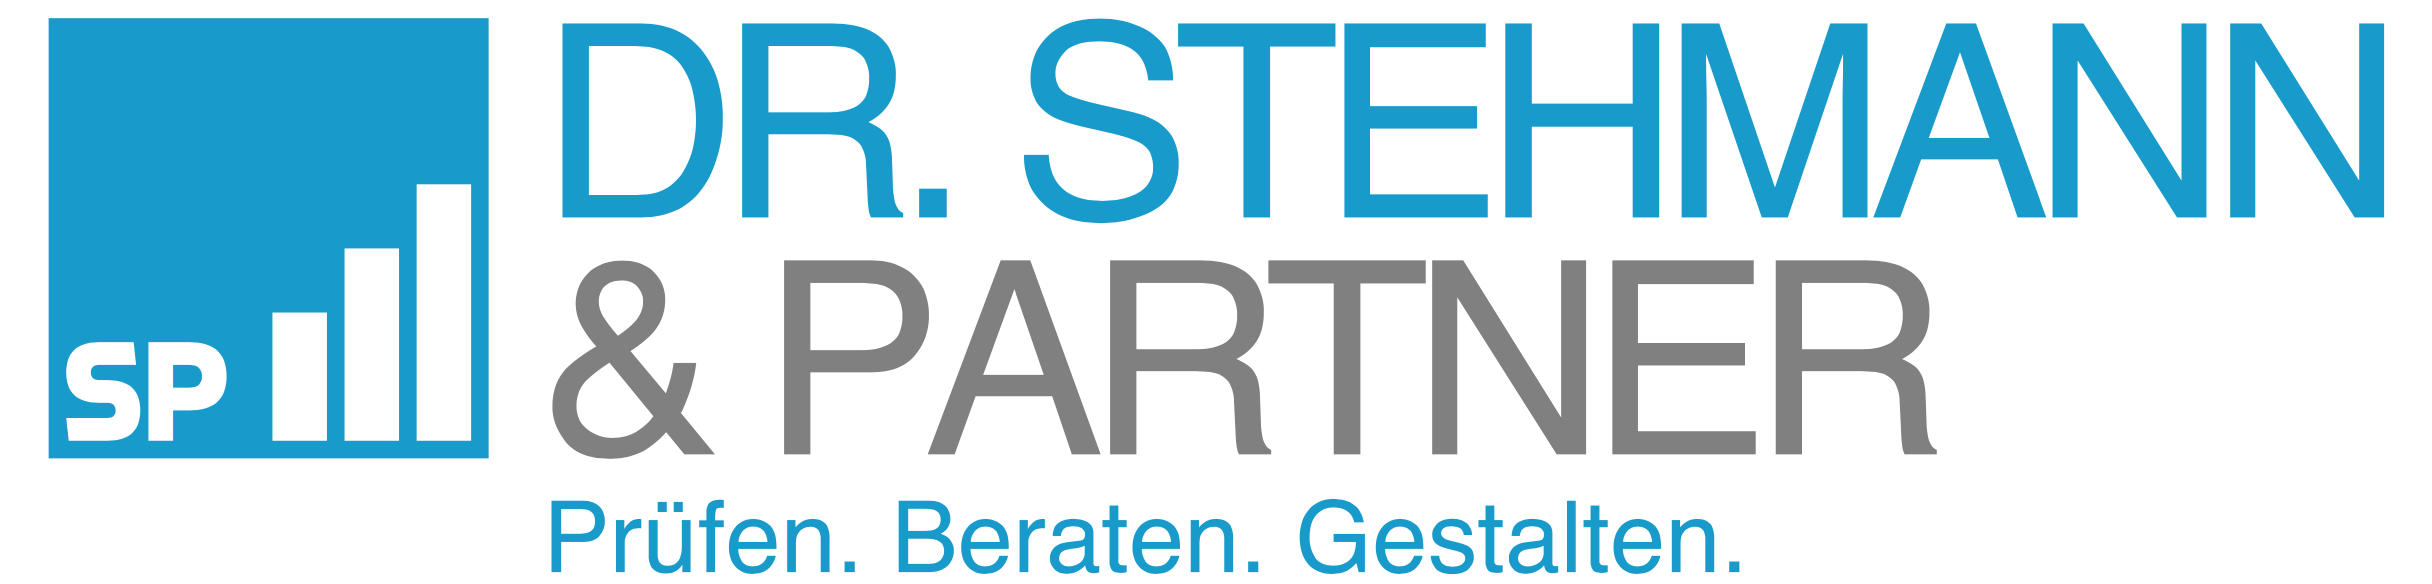 Dr. Stehmann & Partner